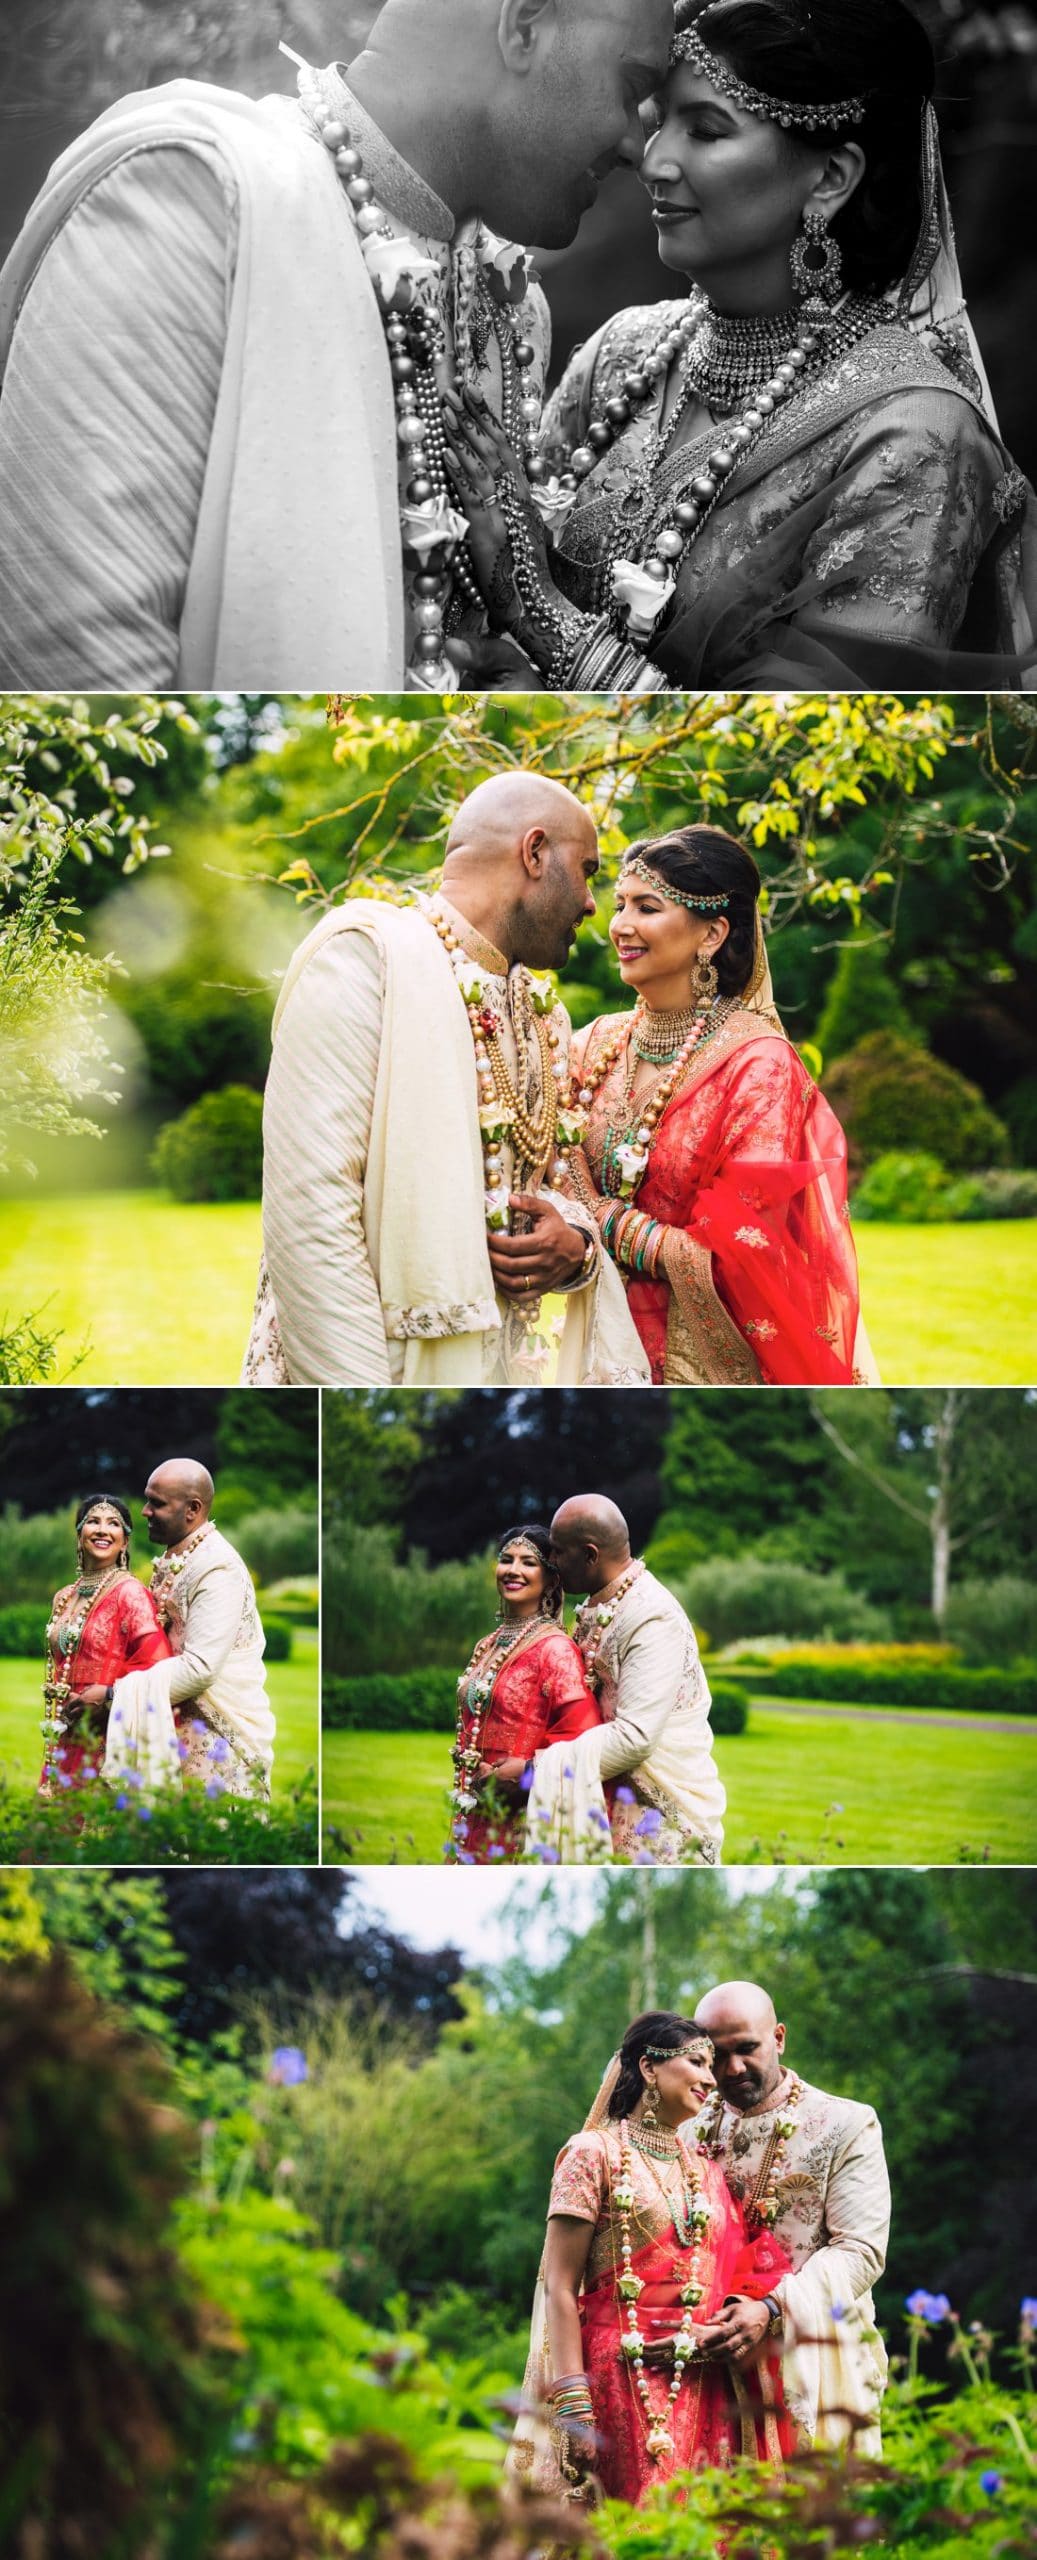 Winstanley House Hindu Wedding Photography 19 3 scaled